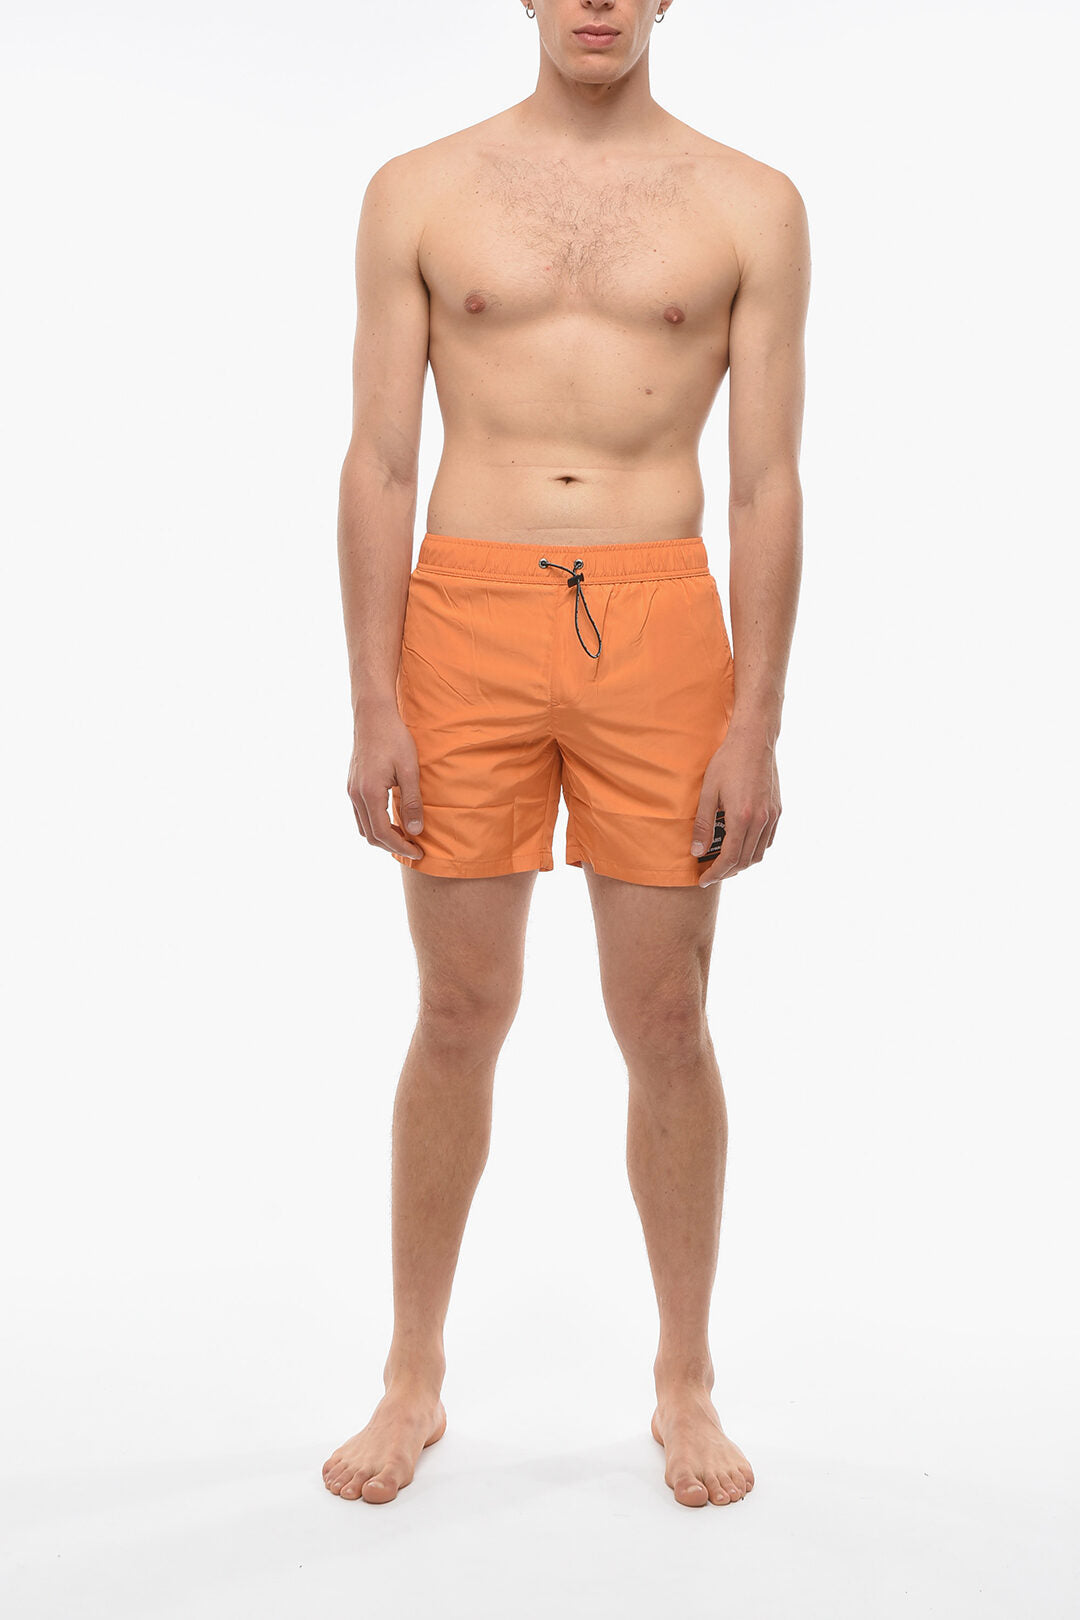 Rue st-guillame plain 3-pocket orange boxer swimsuit